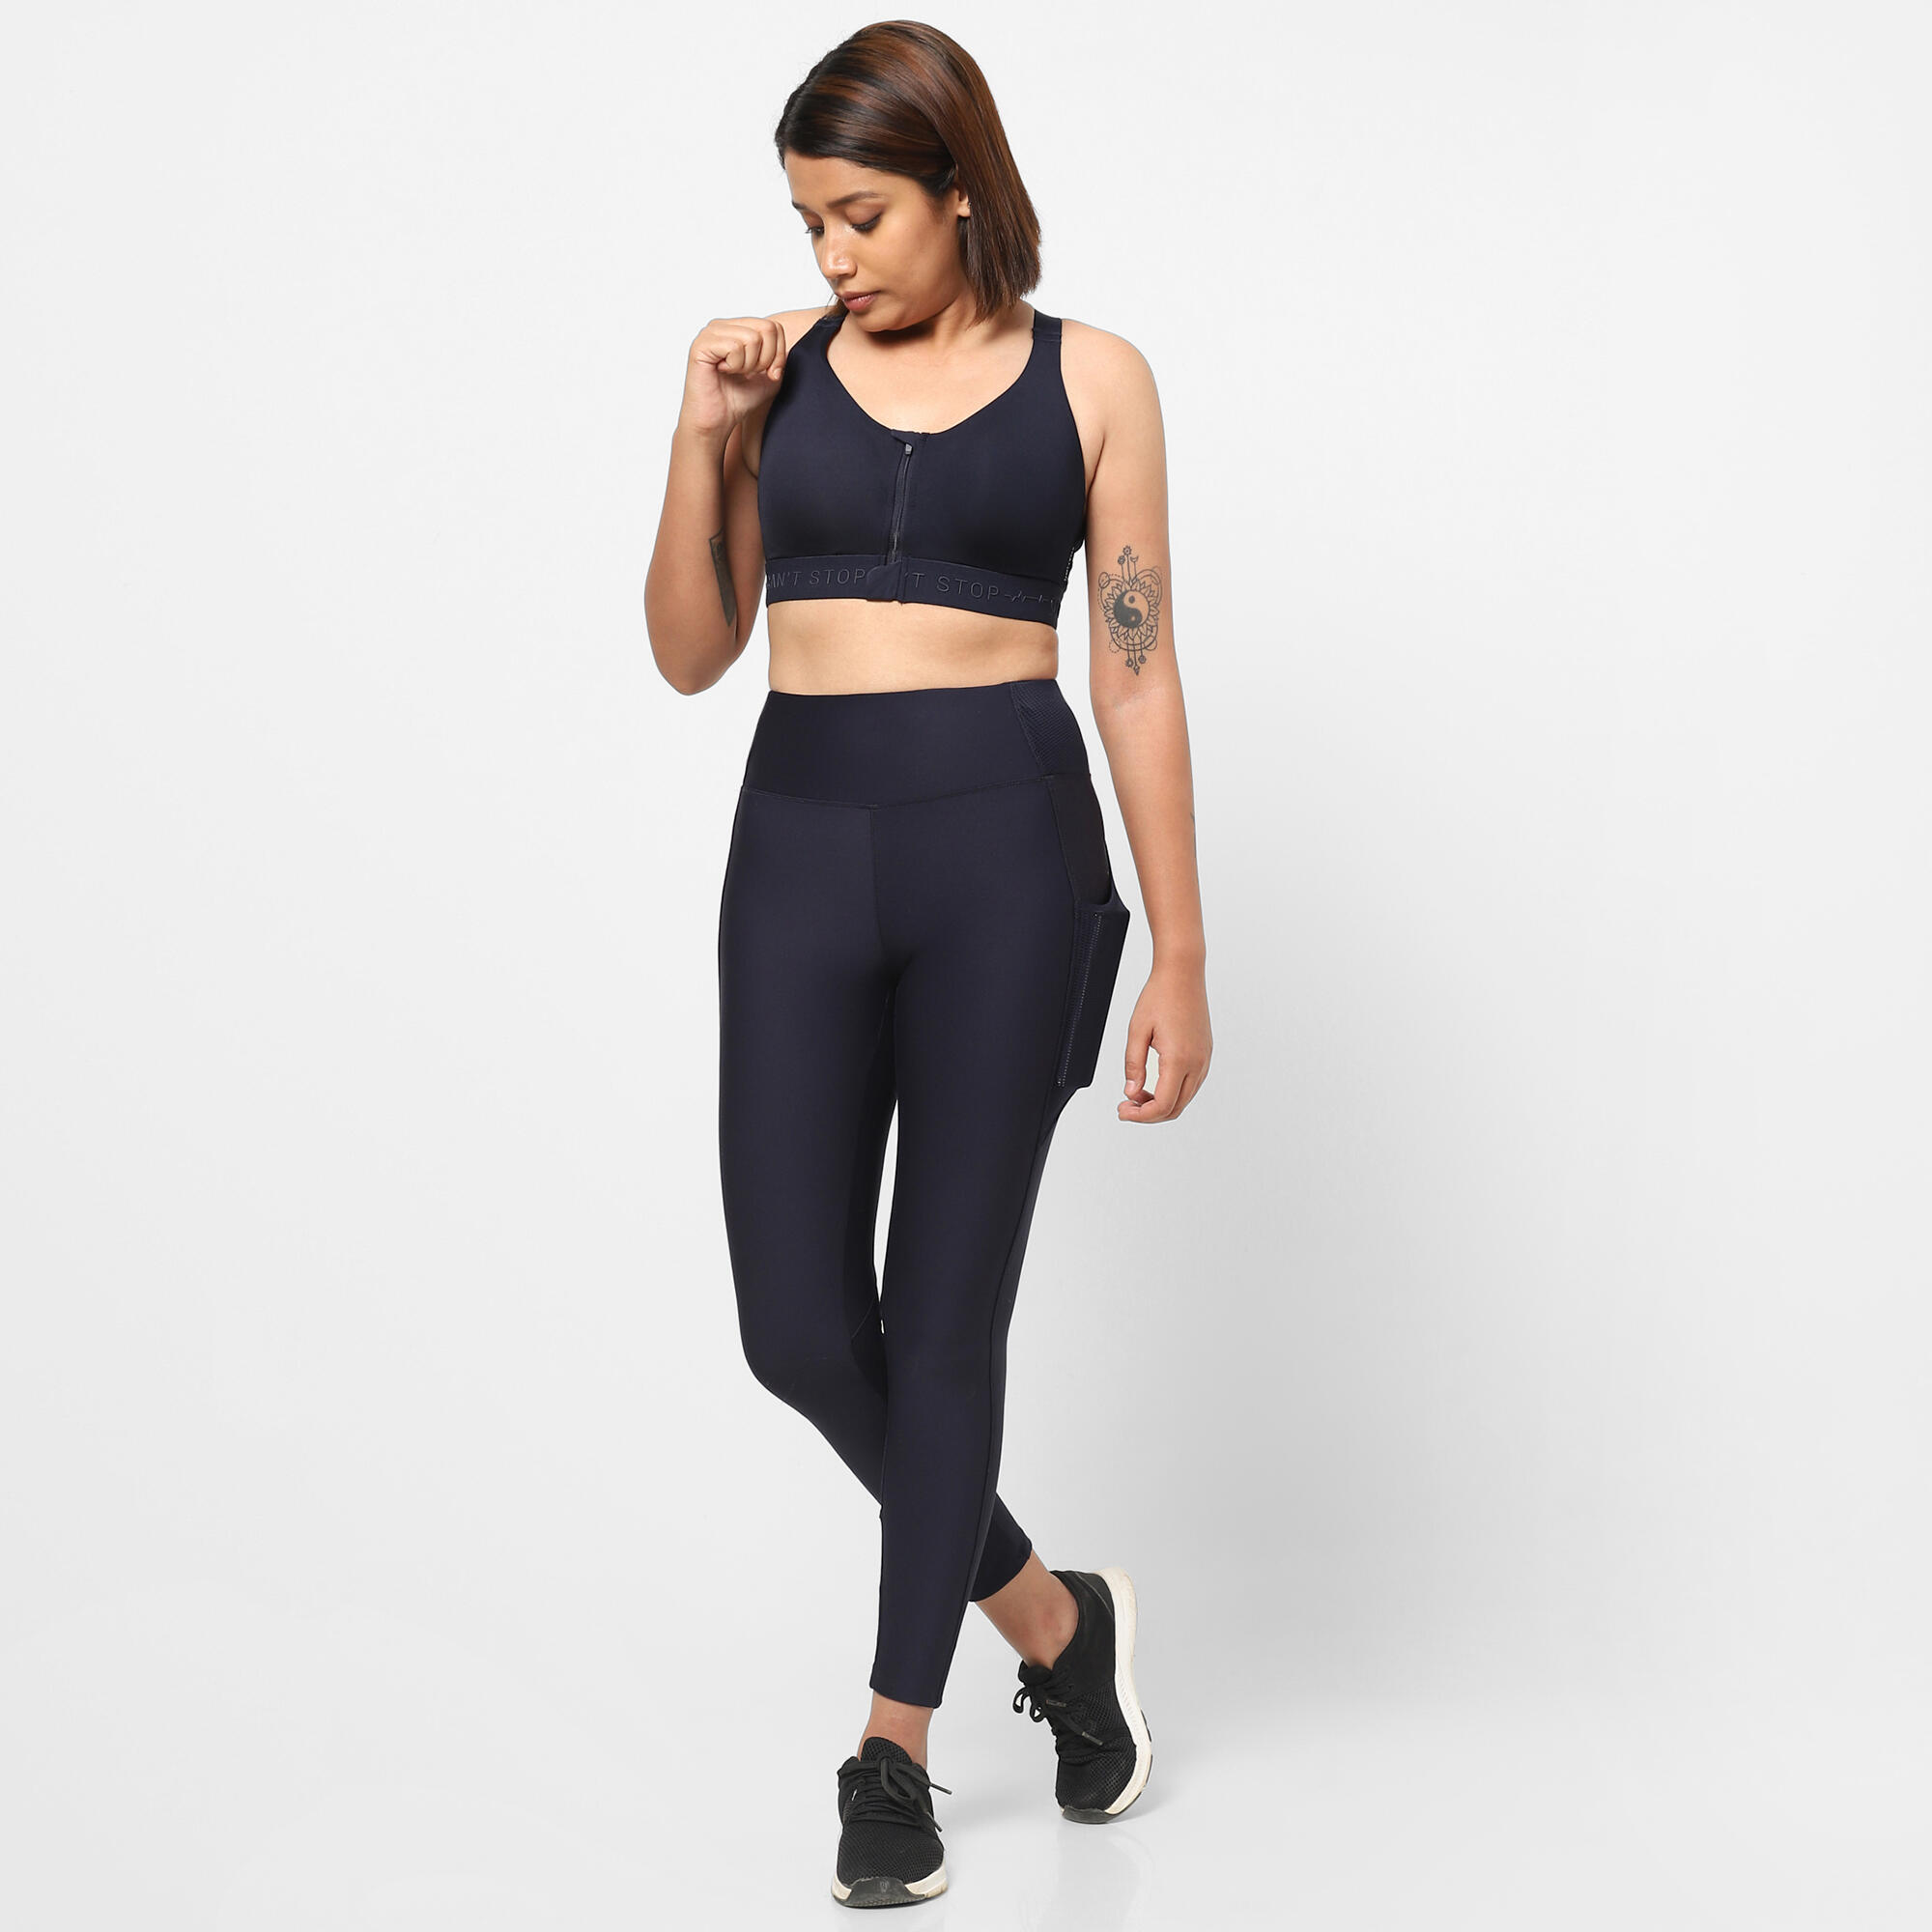 Womens High Waist Gym Leggings Pocket Fitness Sports Running Yoga Pants  Stretch | eBay